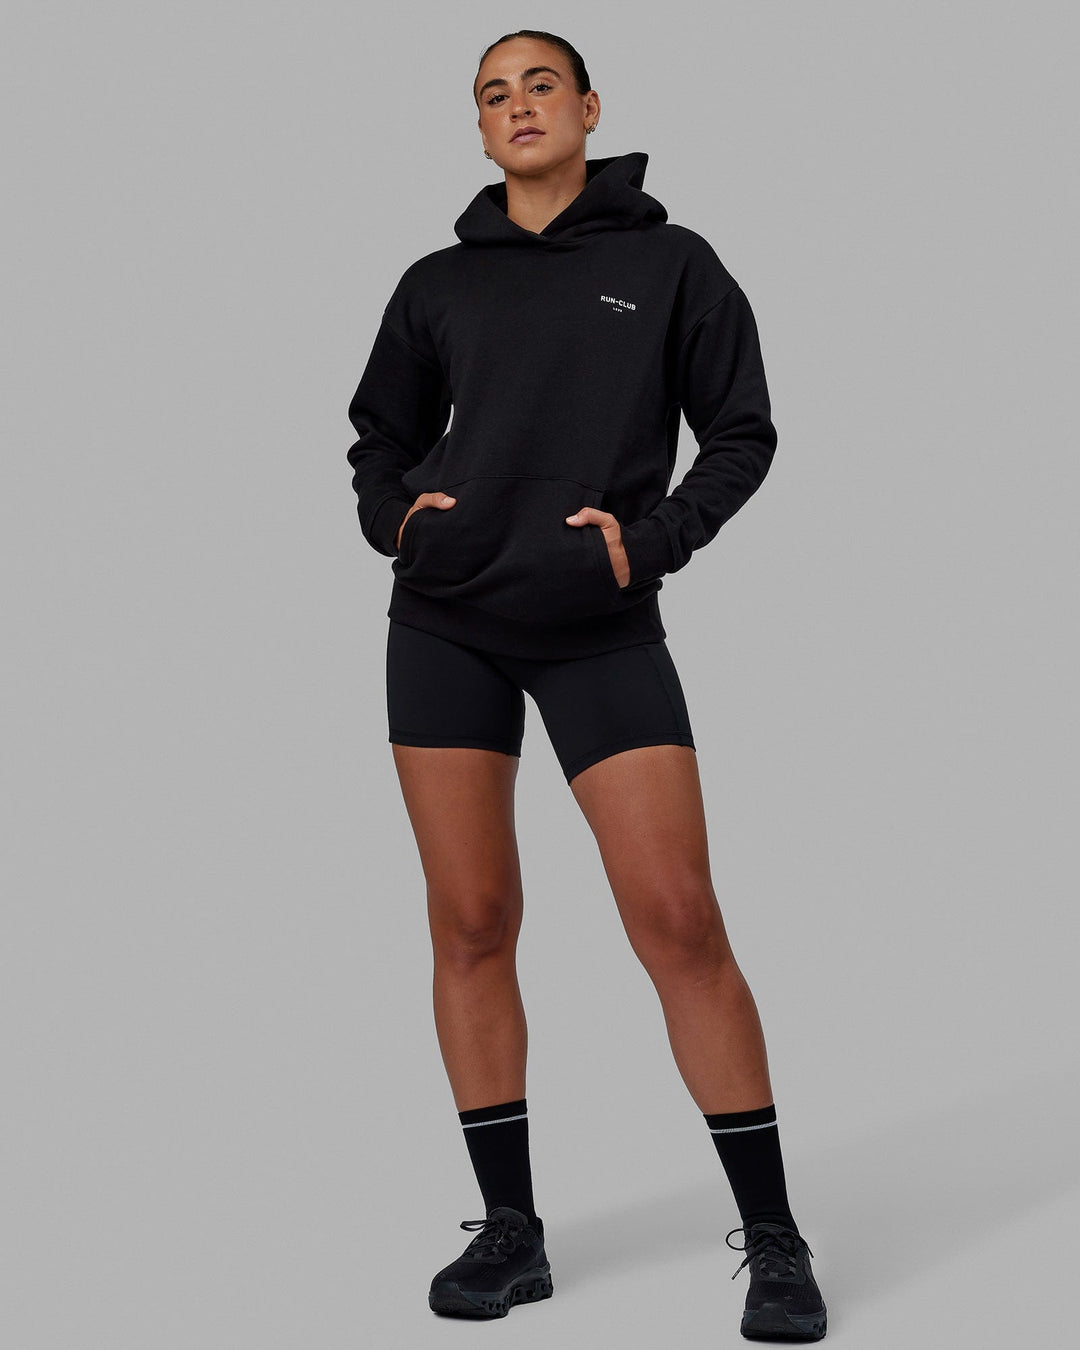 Woman wearing Unisex RUN-CLUB Hoodie Oversize - Black